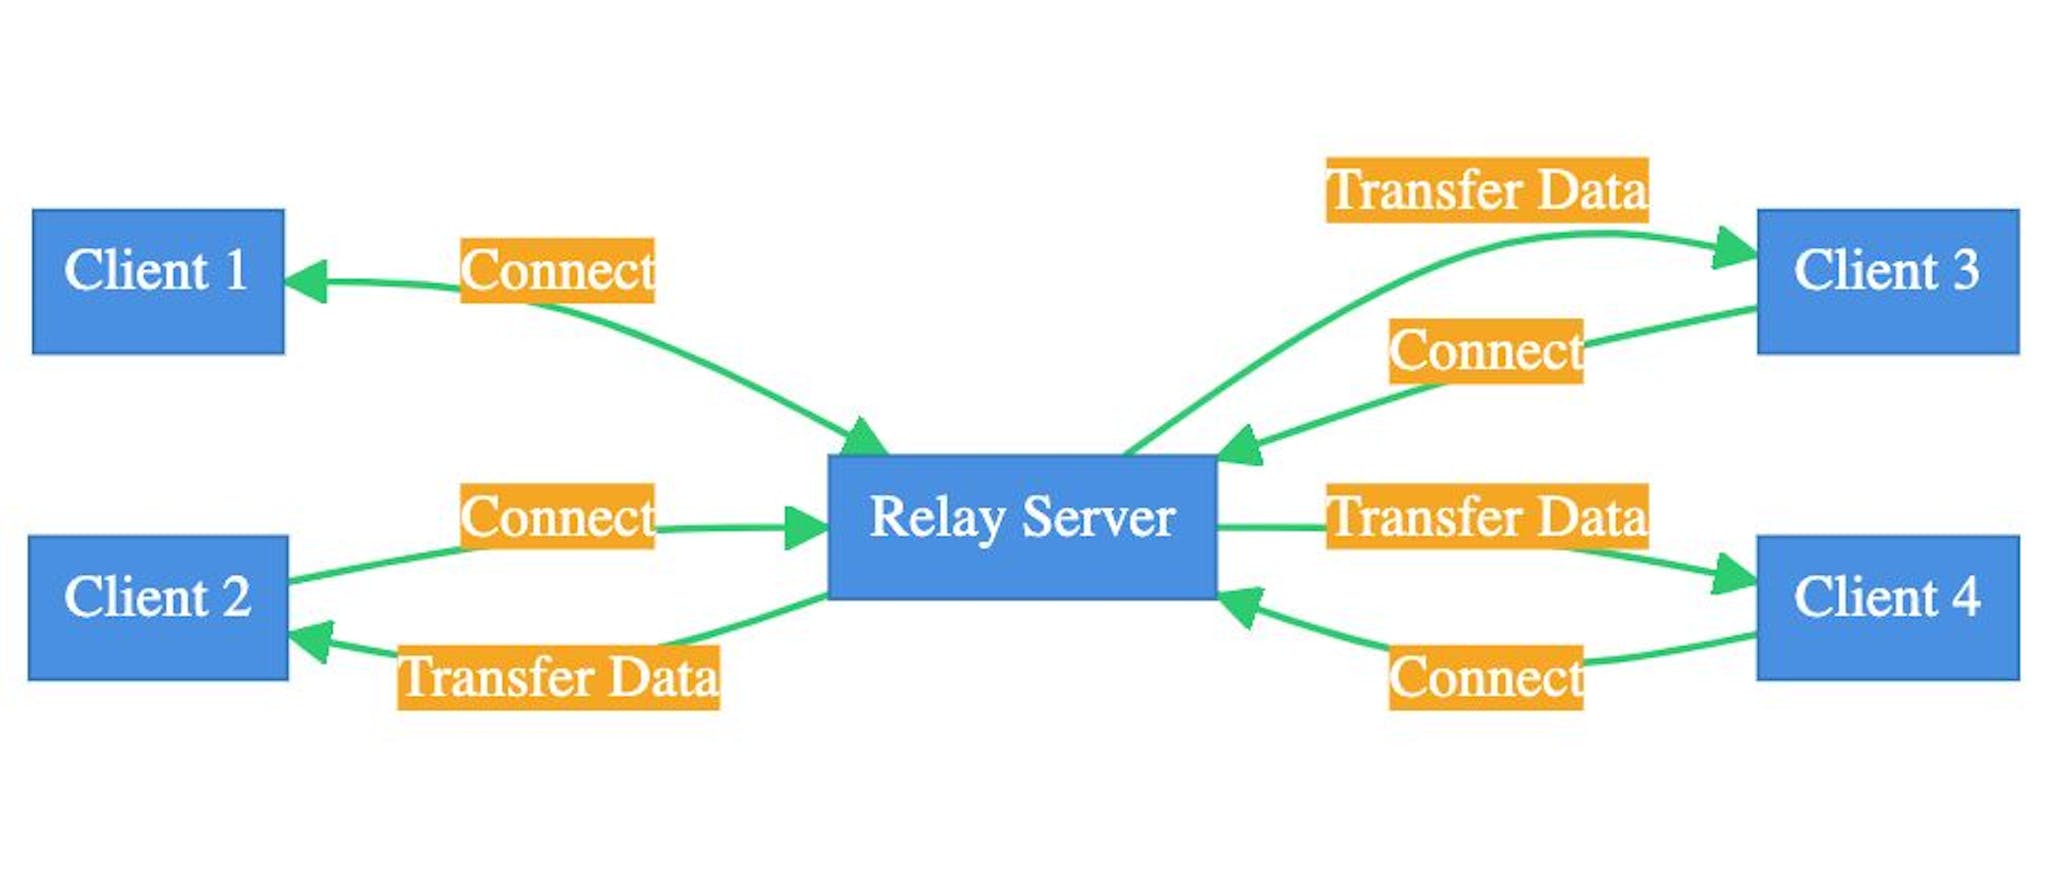 Relay Server